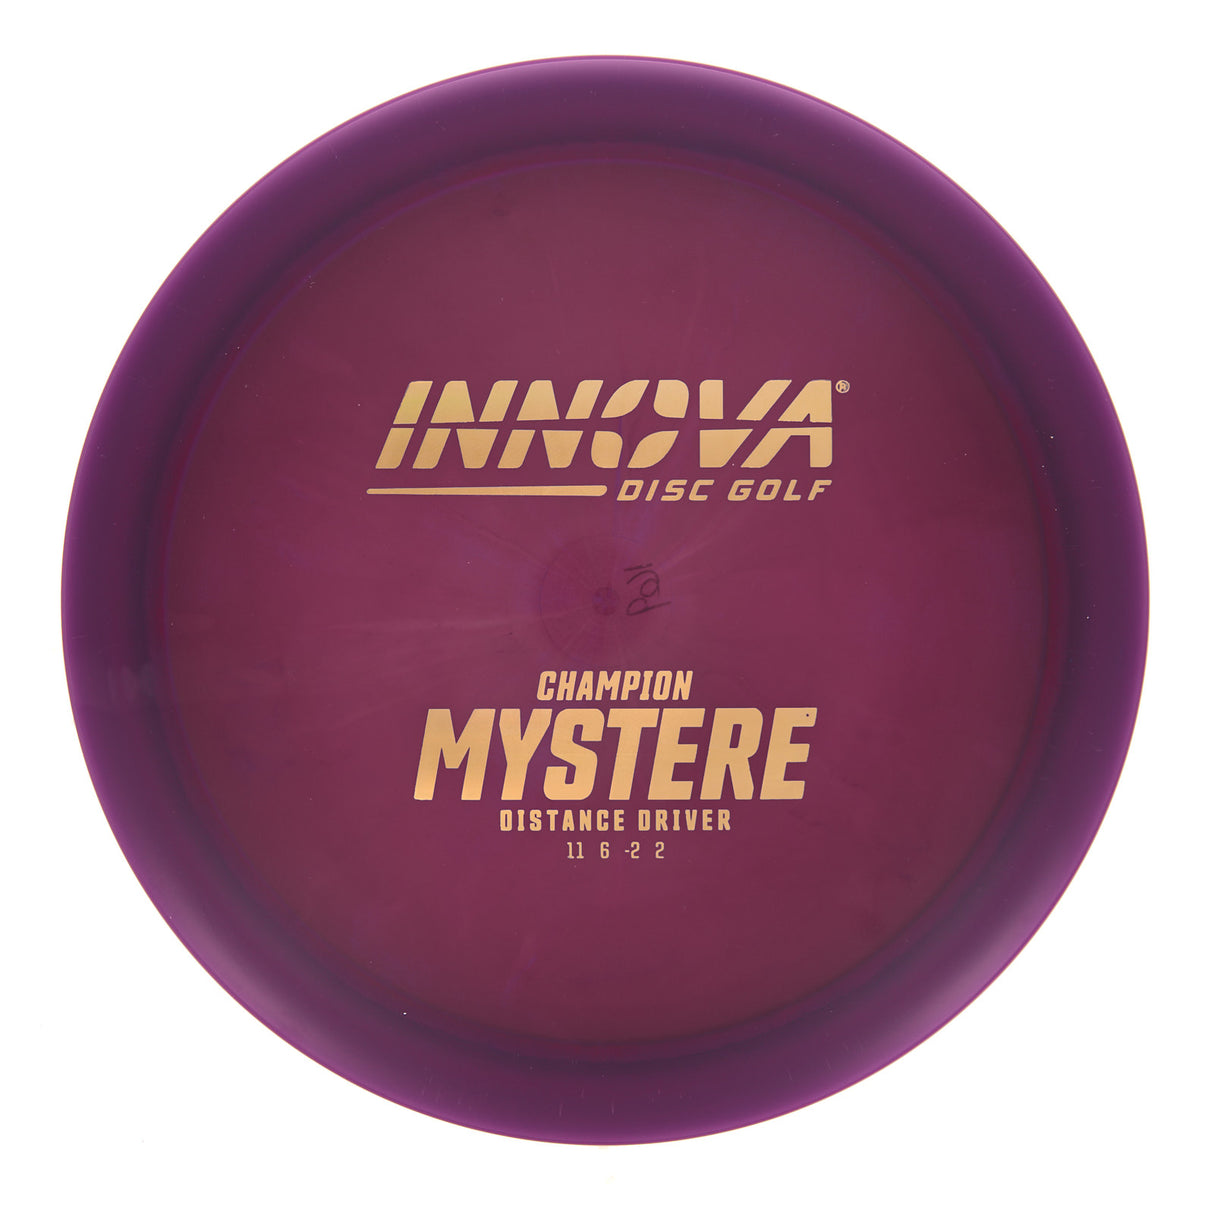 Innova Mystere - Champion 171g | Style 0002